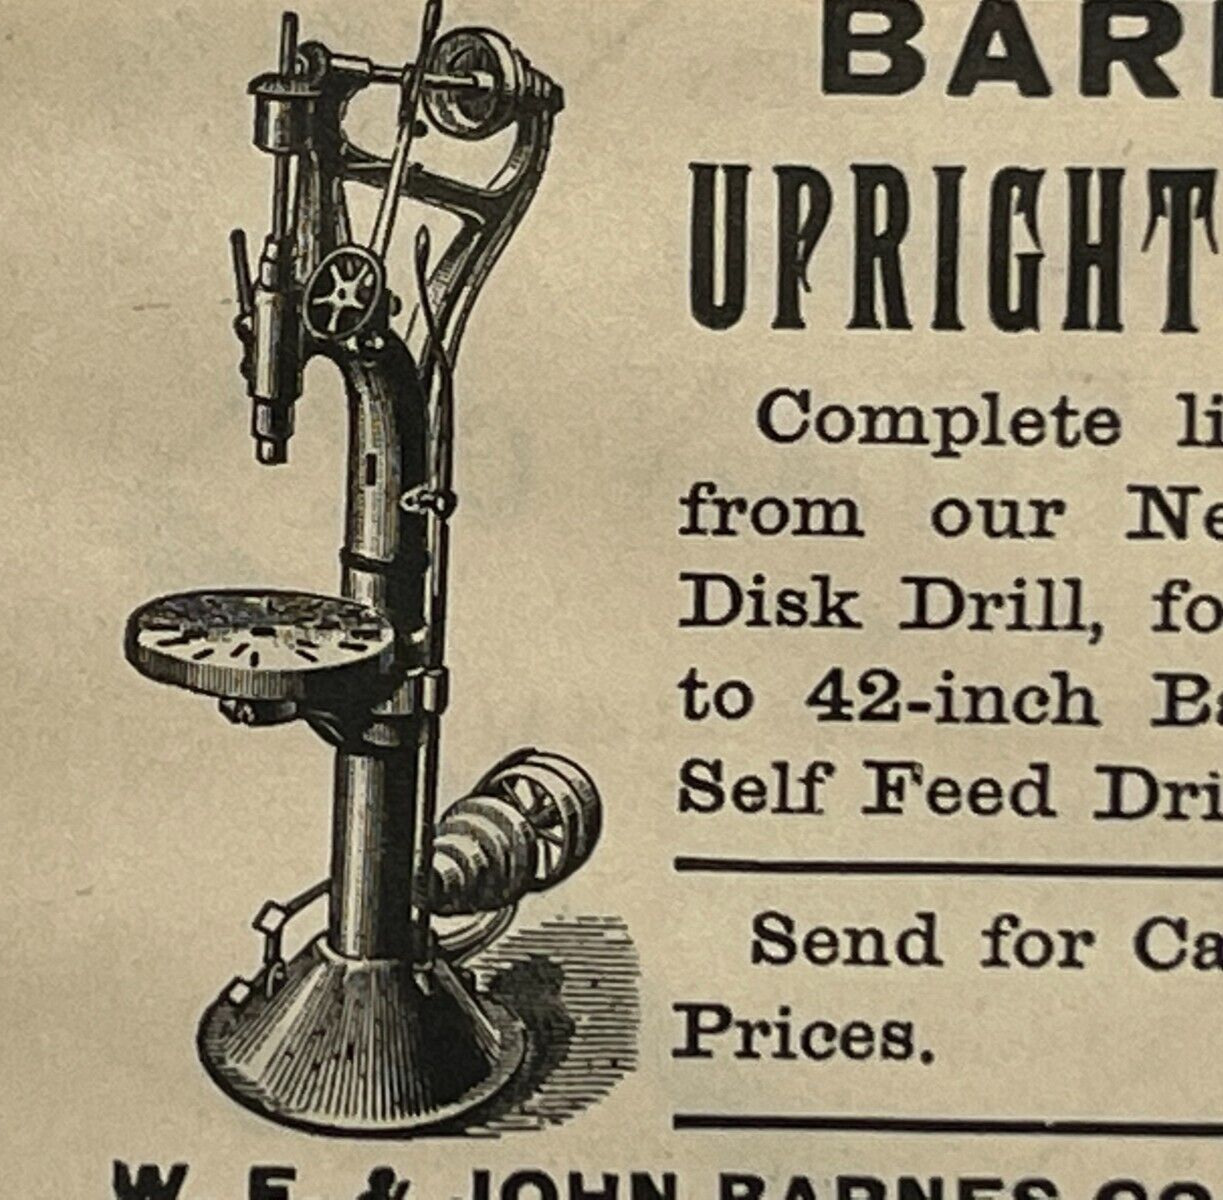 Rockford Illinois Vintage Print Ad W.F. Barnes Upright Drill  Antique Machinery